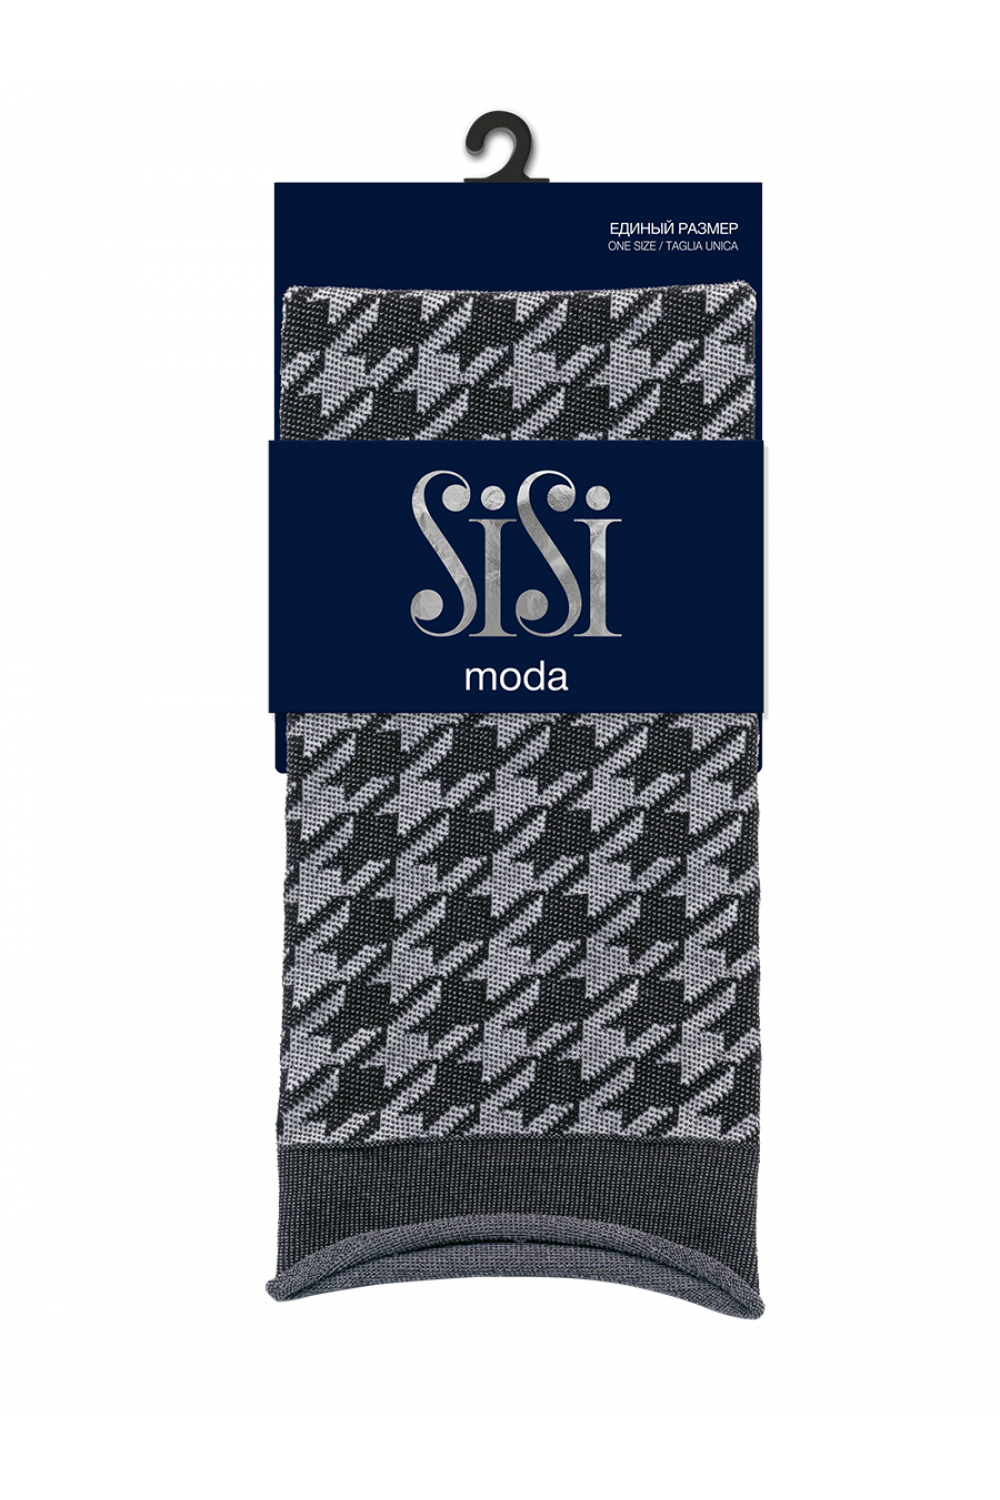 SISI calz. INVERSO 70 3D Женские двусторонние фантазийные носки (м/ф с рисунком), Sisi